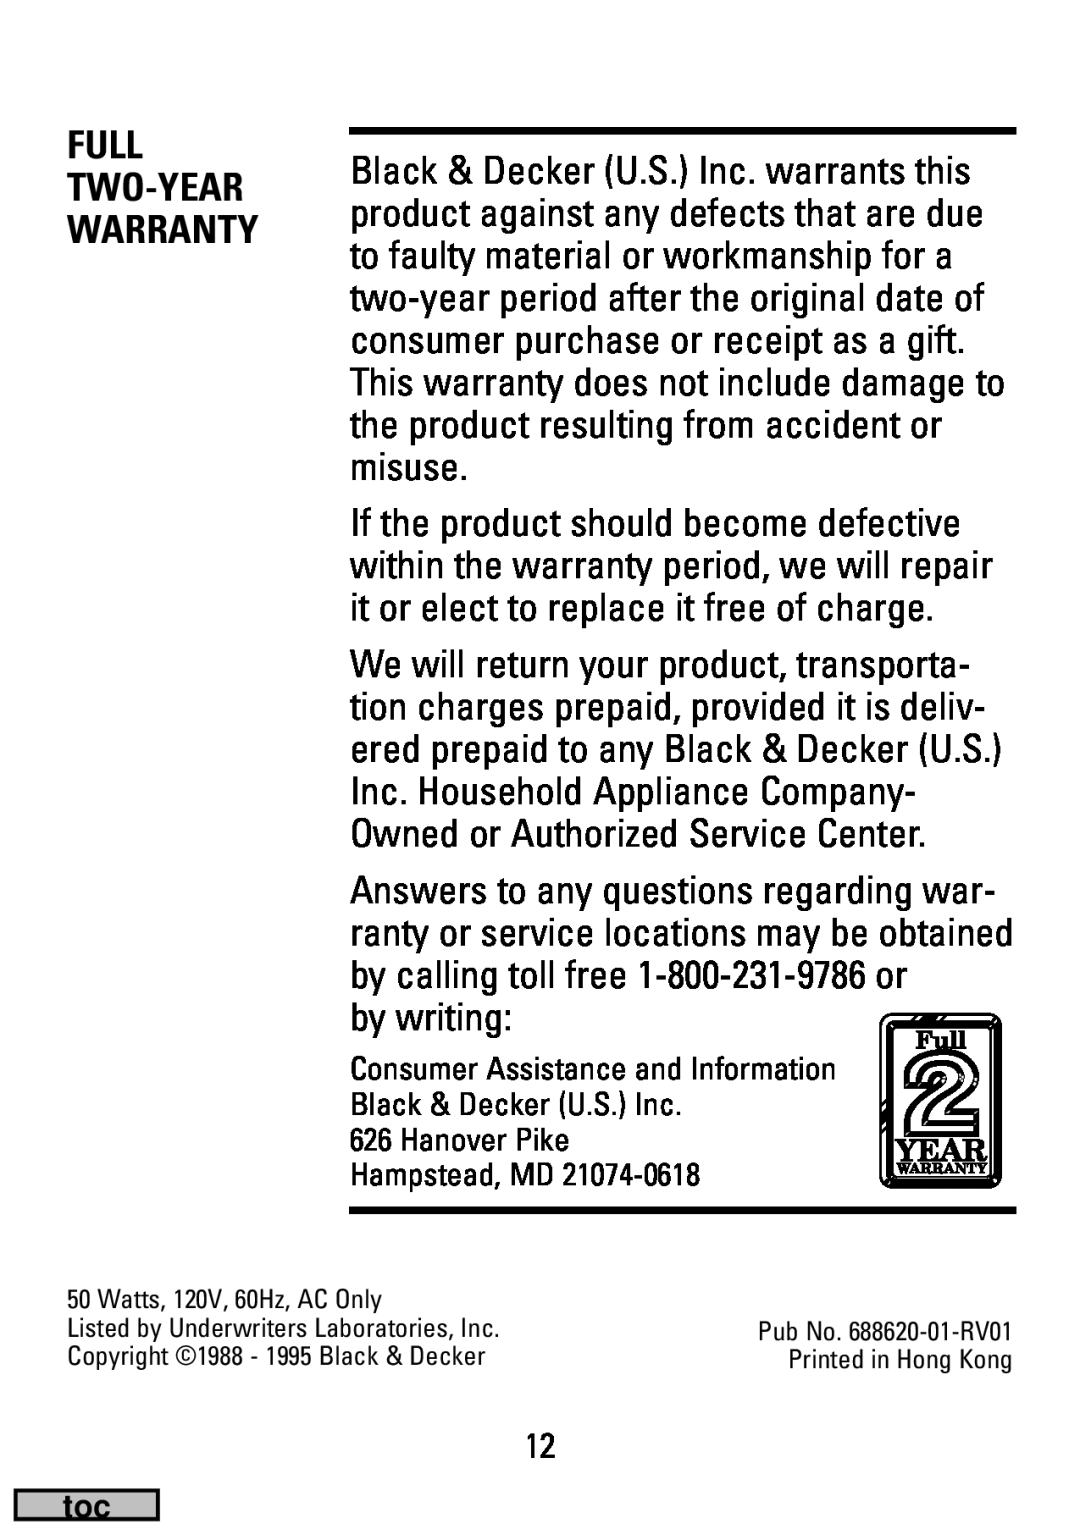 Black & Decker HC20 manual by writing, Full Two-Year Warranty 